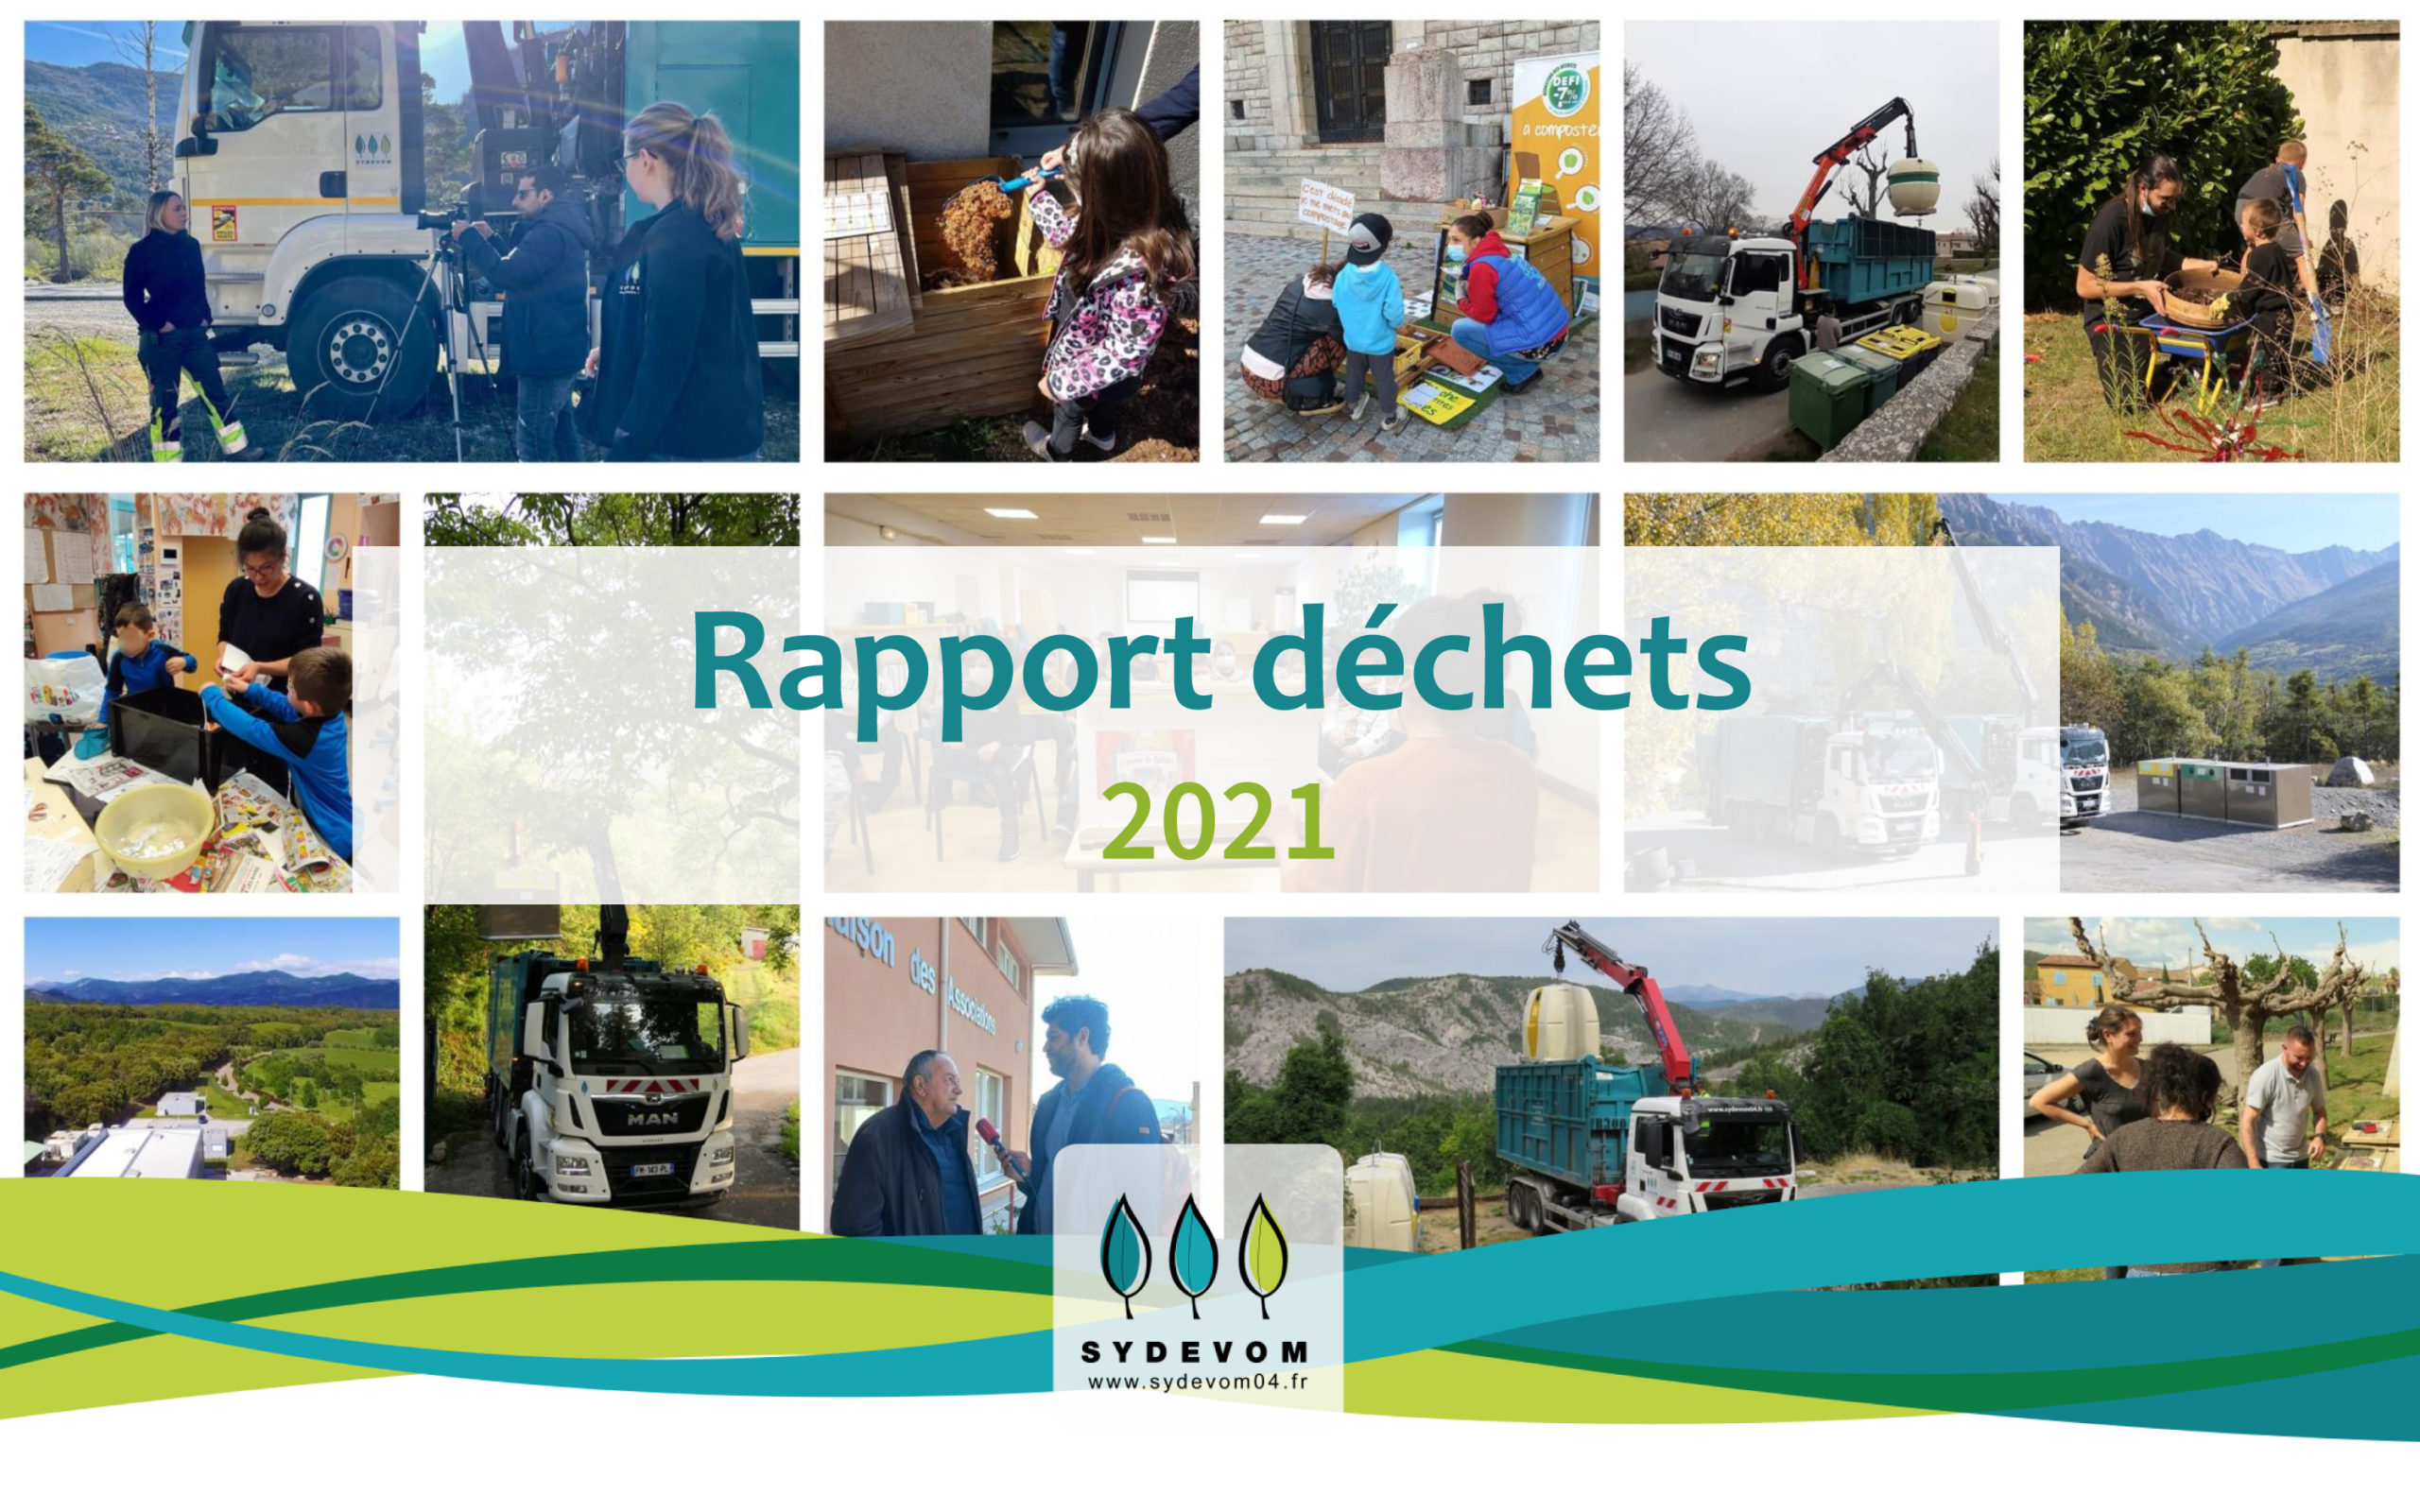 Rapport dechets 2021